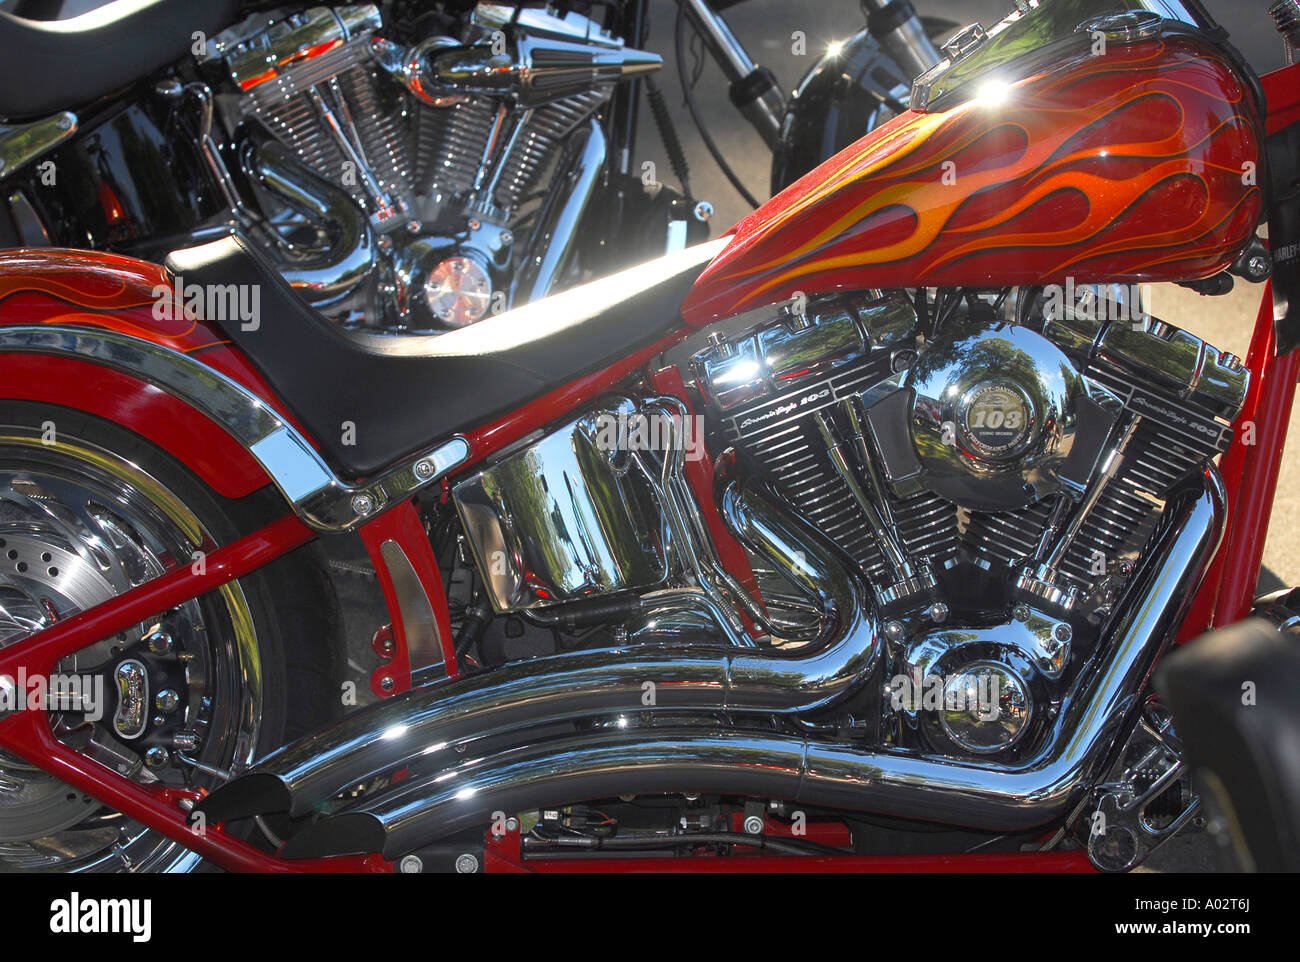 Moto Custom Harley Davidson avec des flammes et motif chrome Banque D'Images